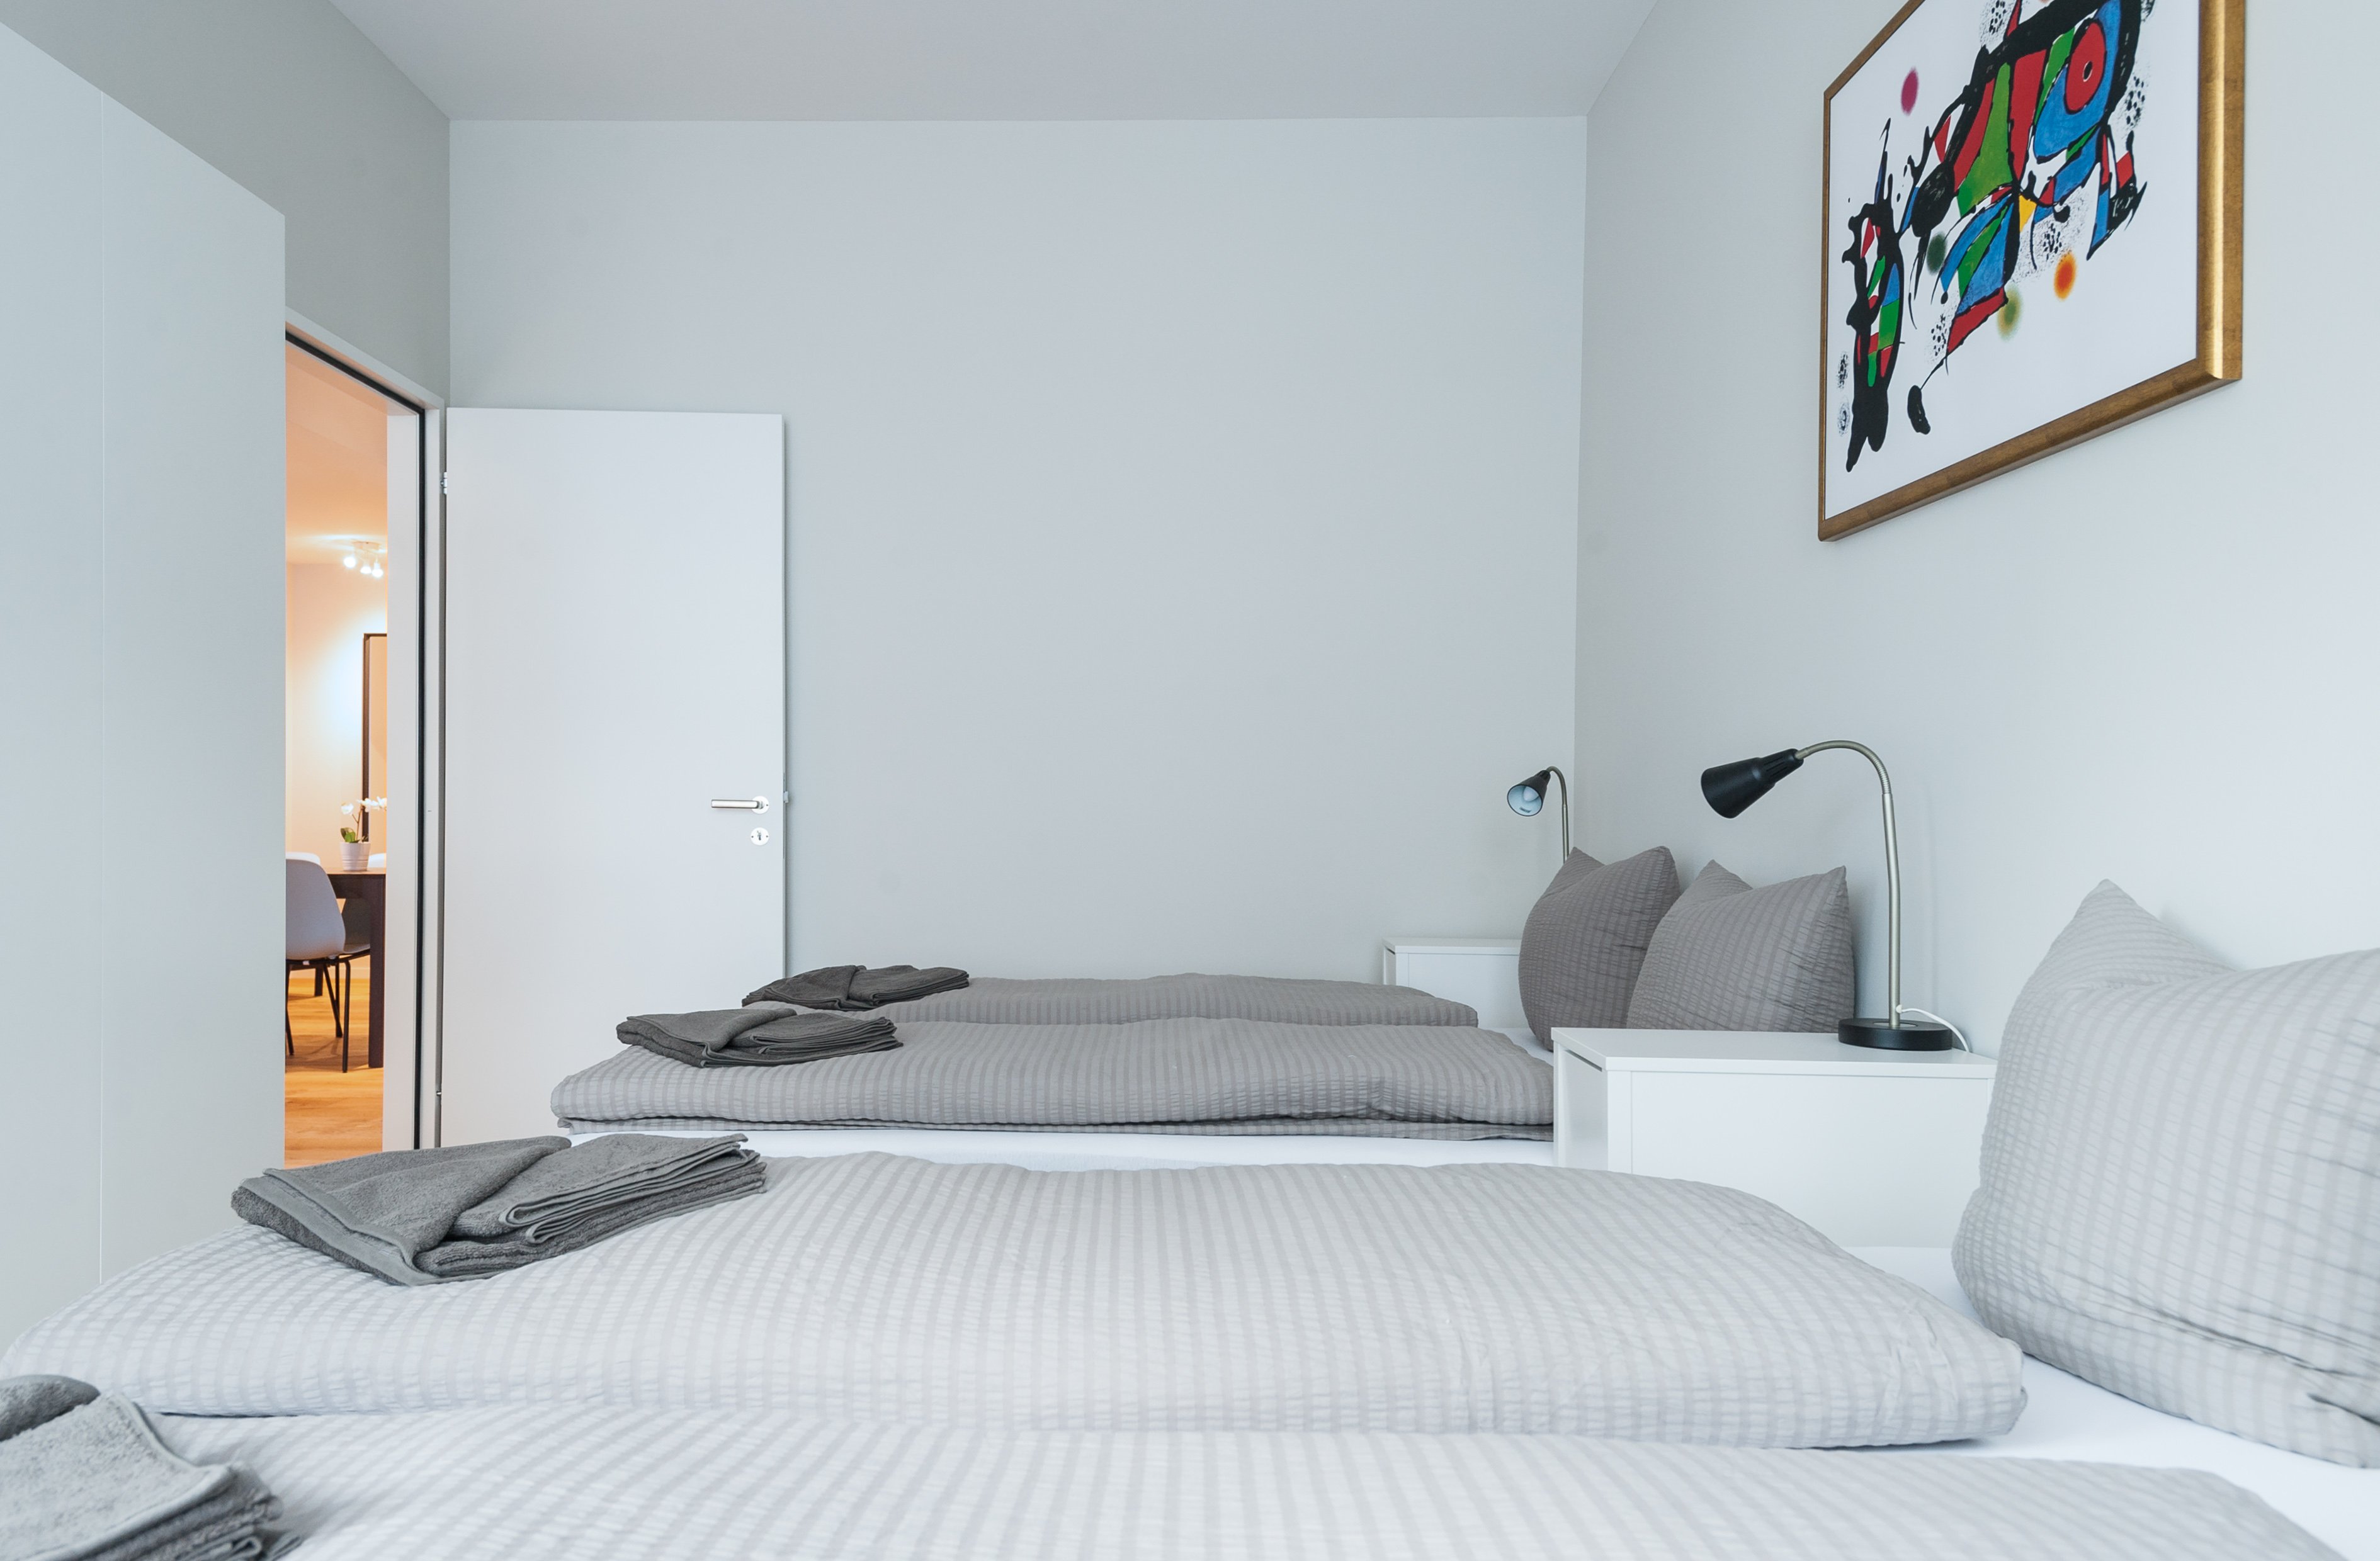 2 bedroom Apartment Miró II - Wohnungen zur Miete in Basel, Basel-Stadt,  Schweiz